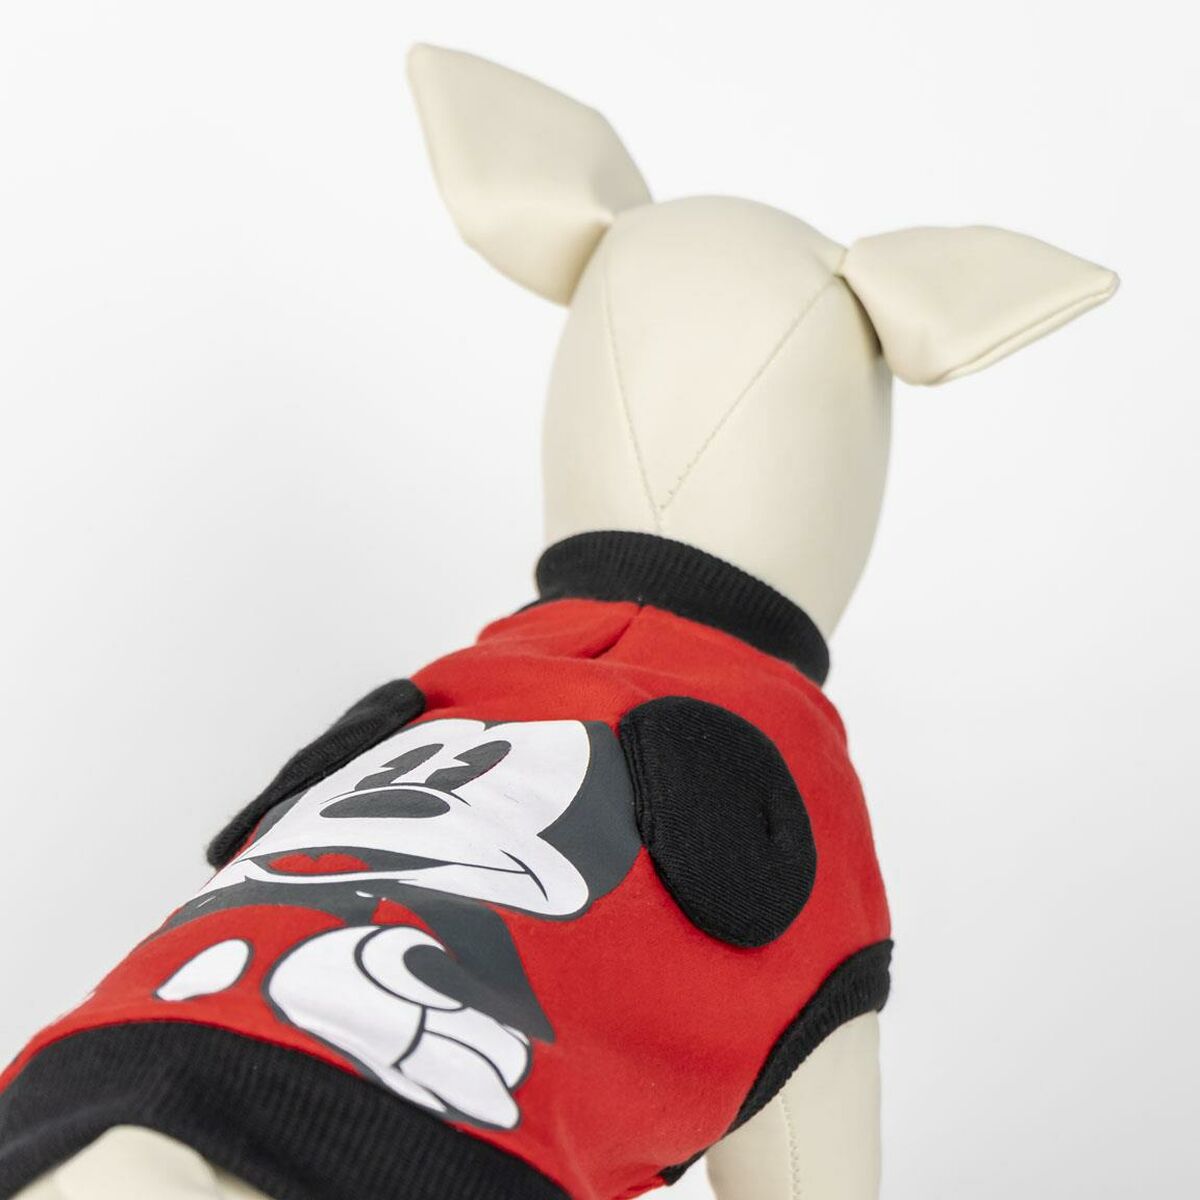 Hundepulli Mickey Mouse XS Rot